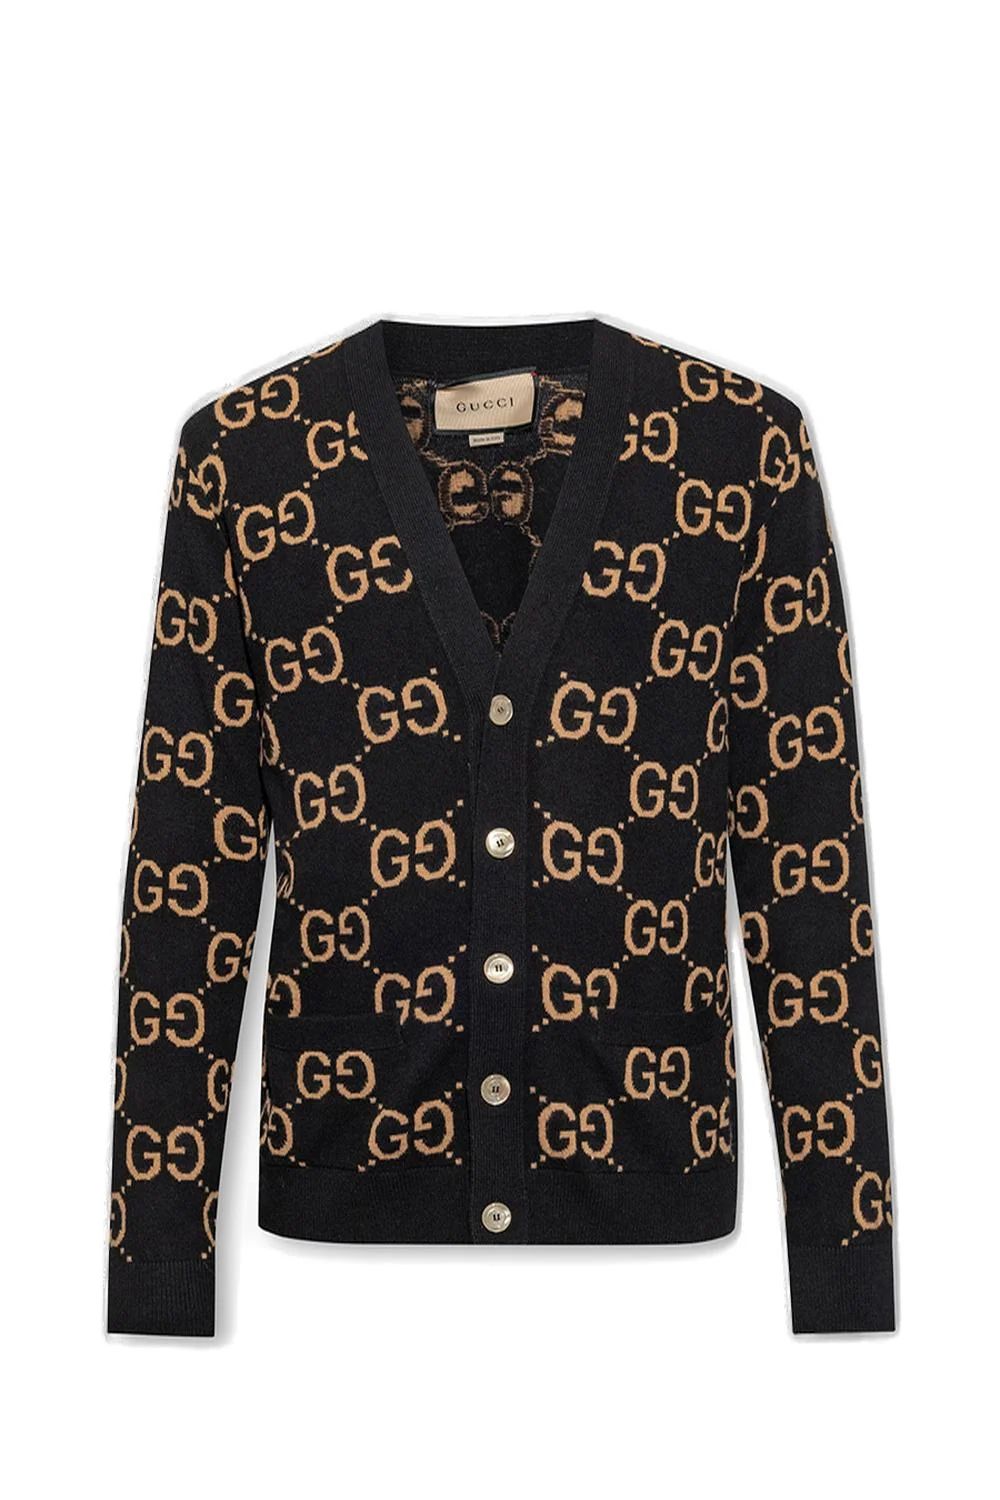 Gucci GG Jacquard Cardigan | Cettire Global